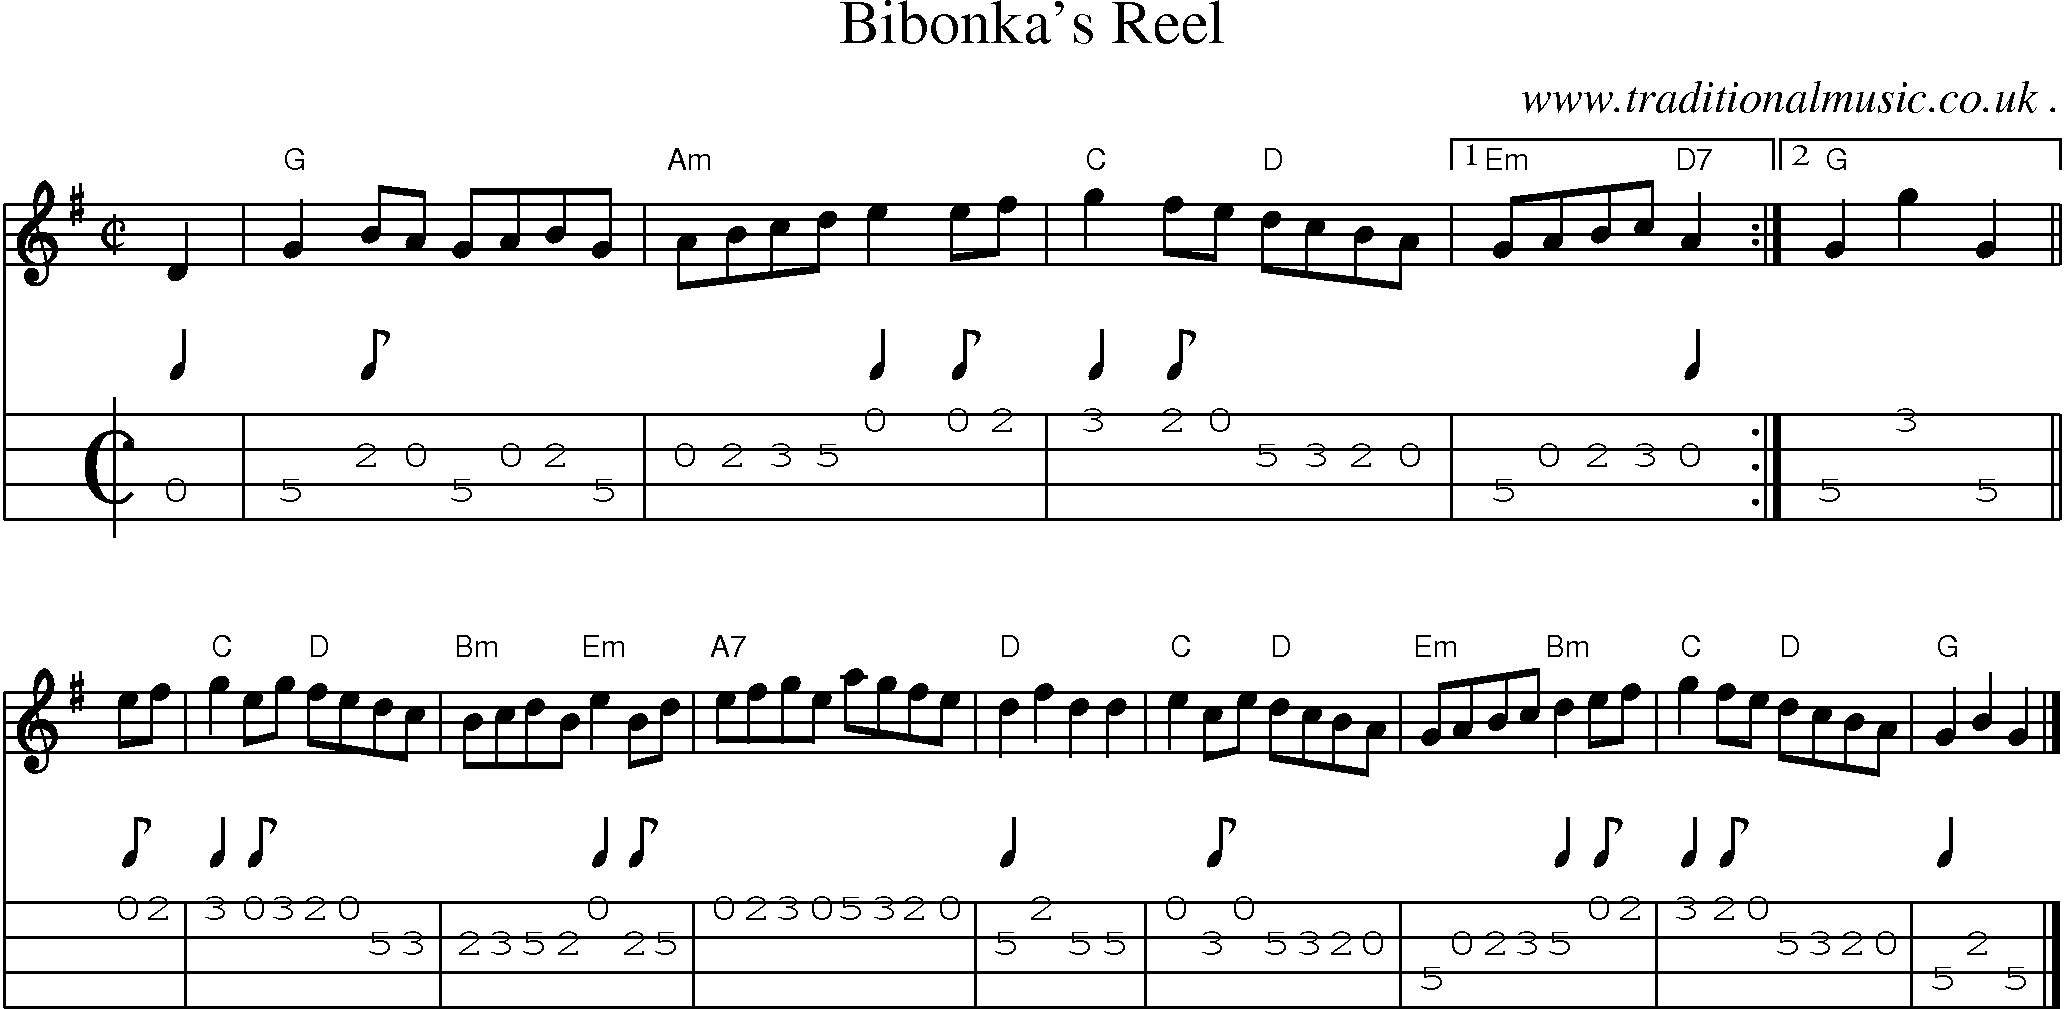 Sheet-music  score, Chords and Mandolin Tabs for Bibonkas Reel